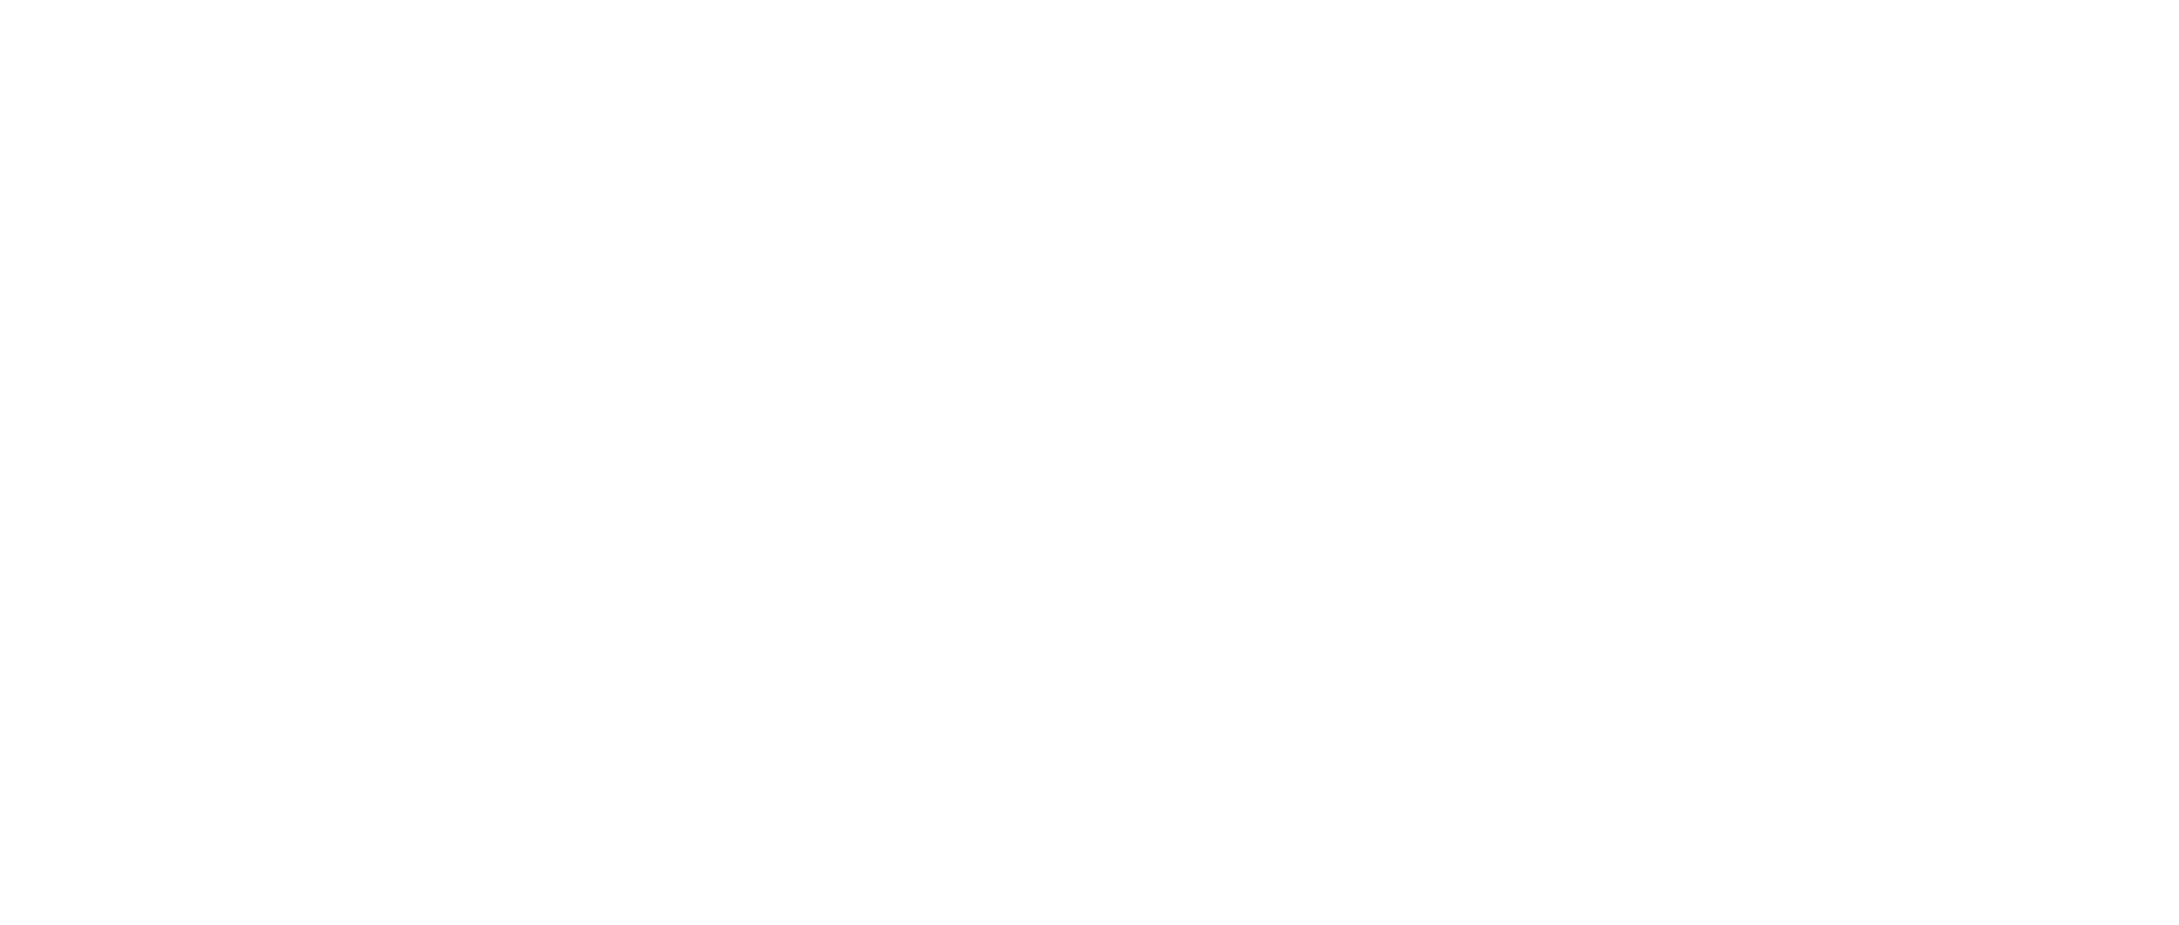 Sandwell Business Ambassadors